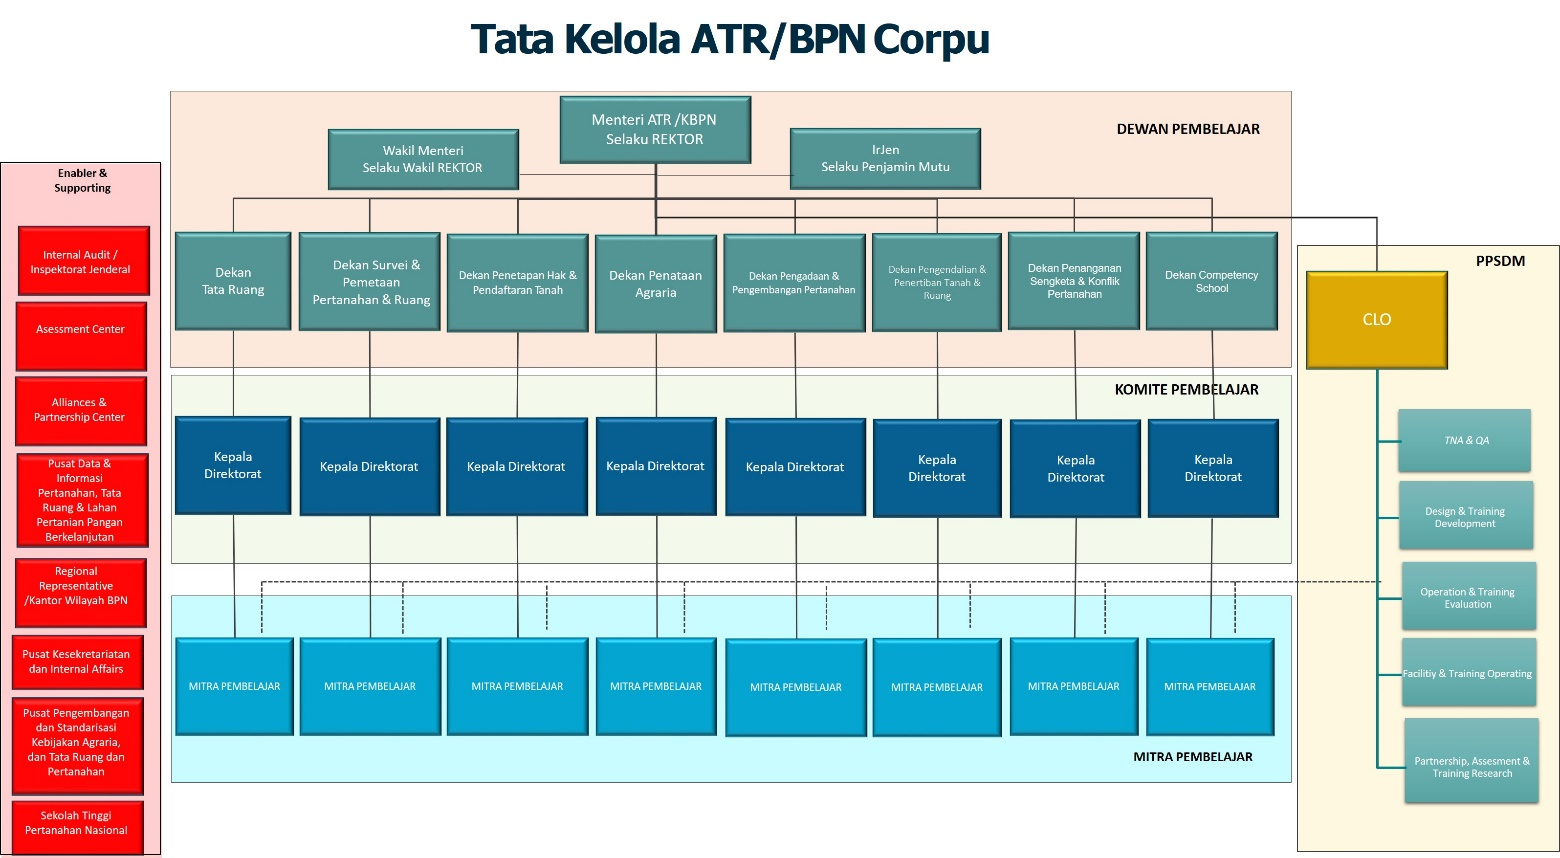 Attachment Tata Kelola Corpu.png